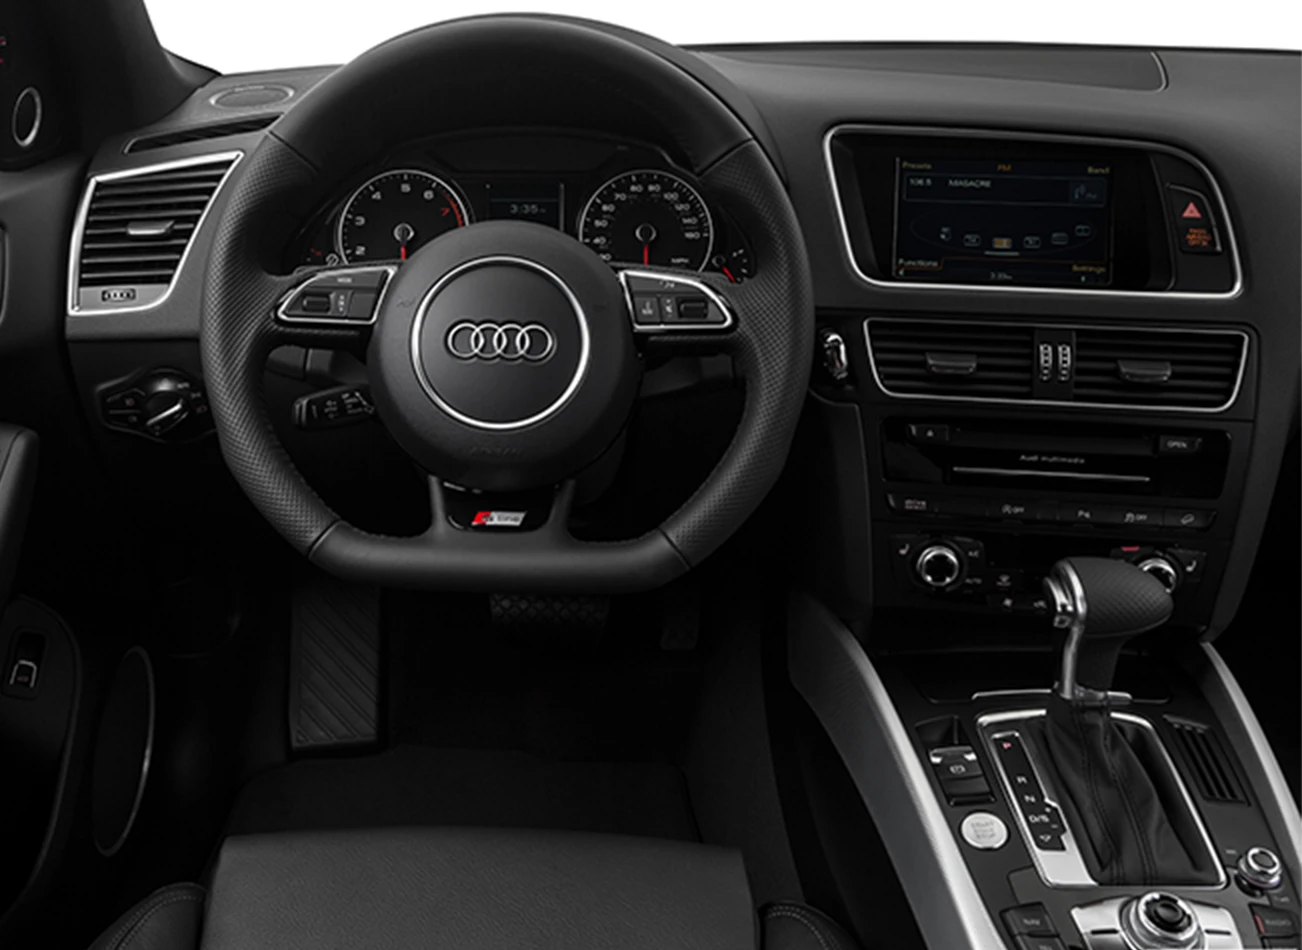 2017 Audi Q5: Reviews, Photos, and More: Reasons to Buy #3 | CarMax